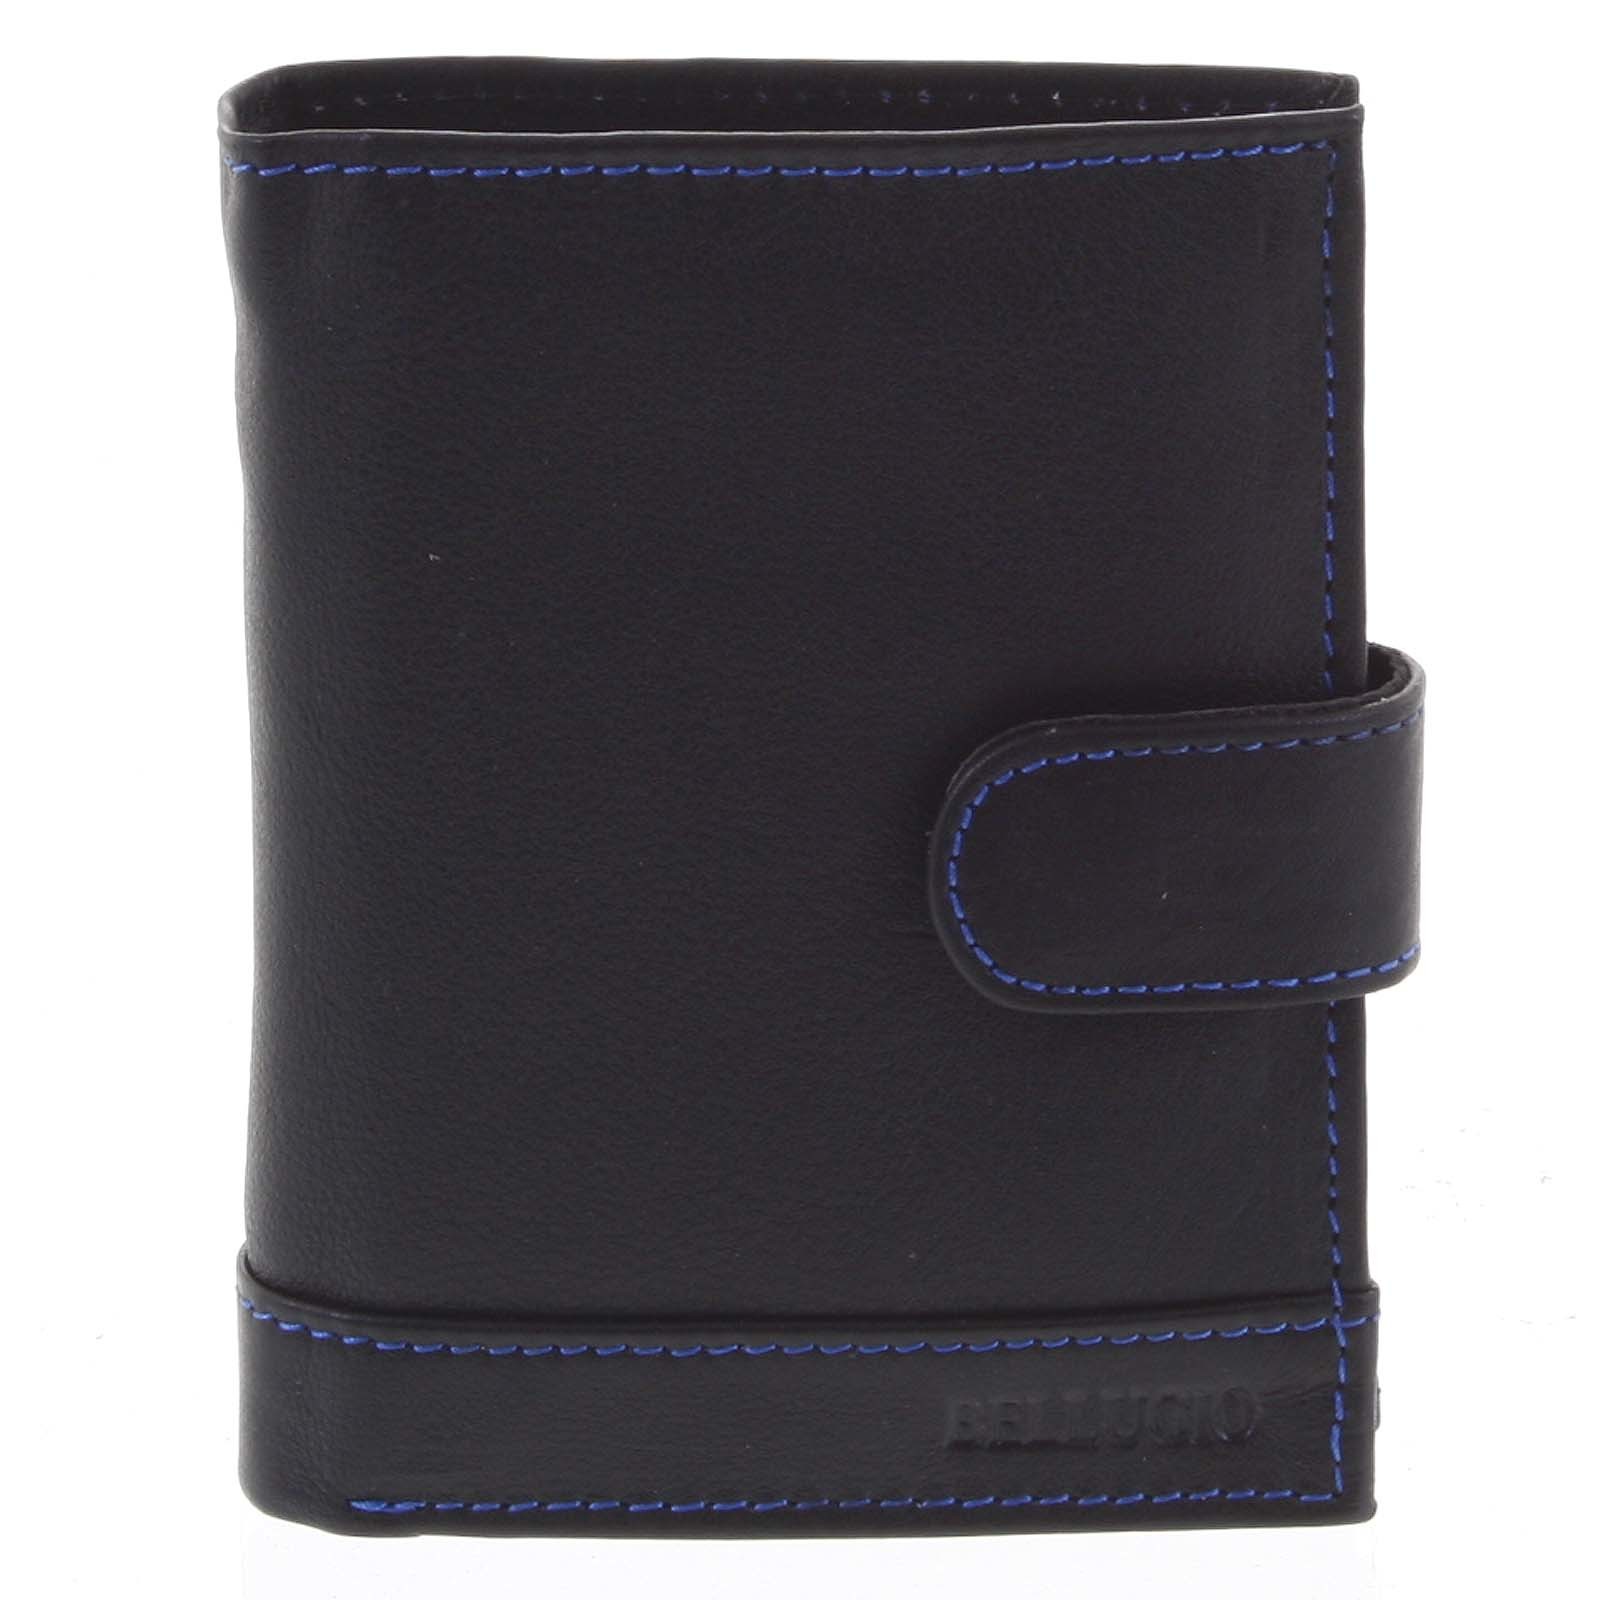 Pánská kožená peněženka černo modrá - Bellugio Garner černá